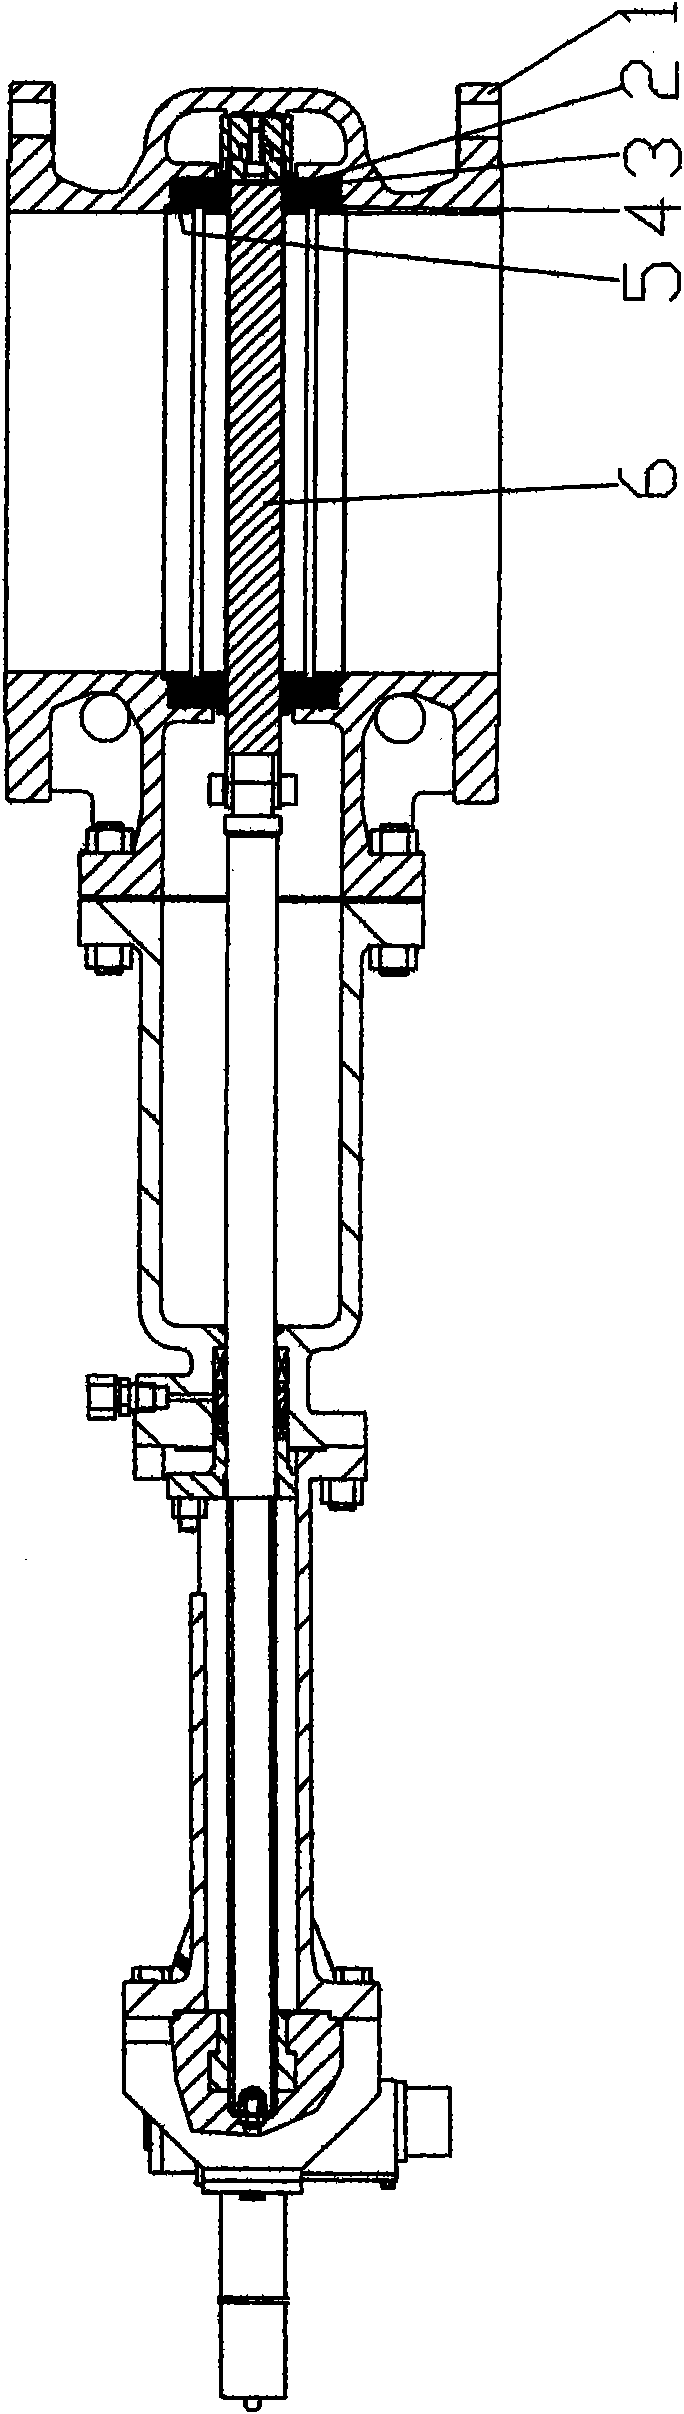 Improved flat gate valve